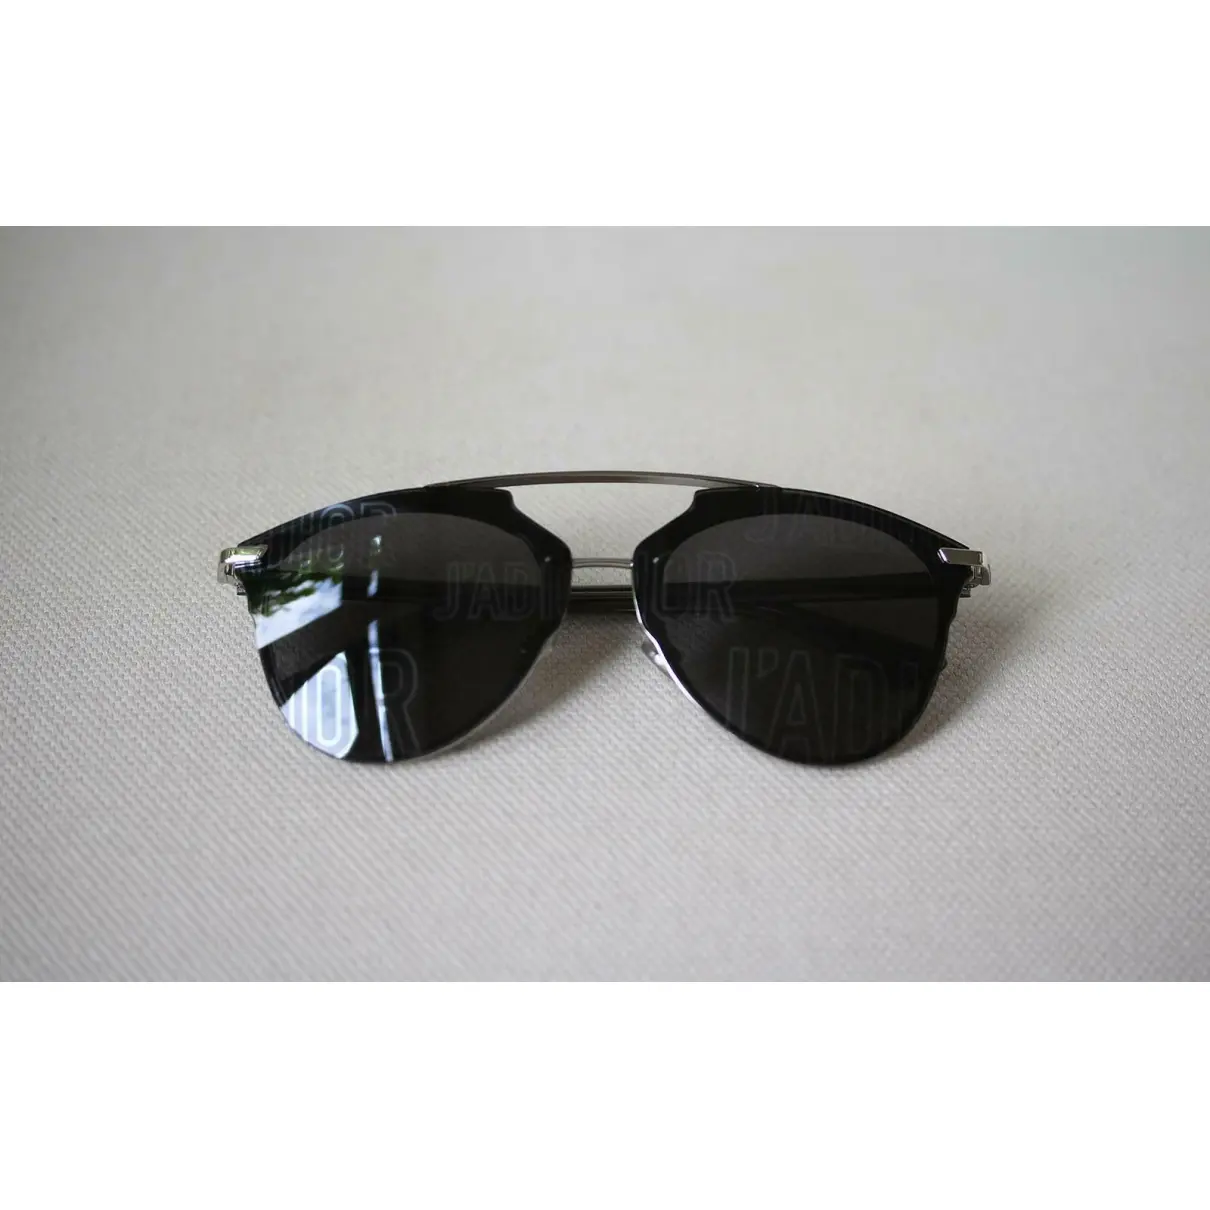 Christian Dior Aviator sunglasses for sale